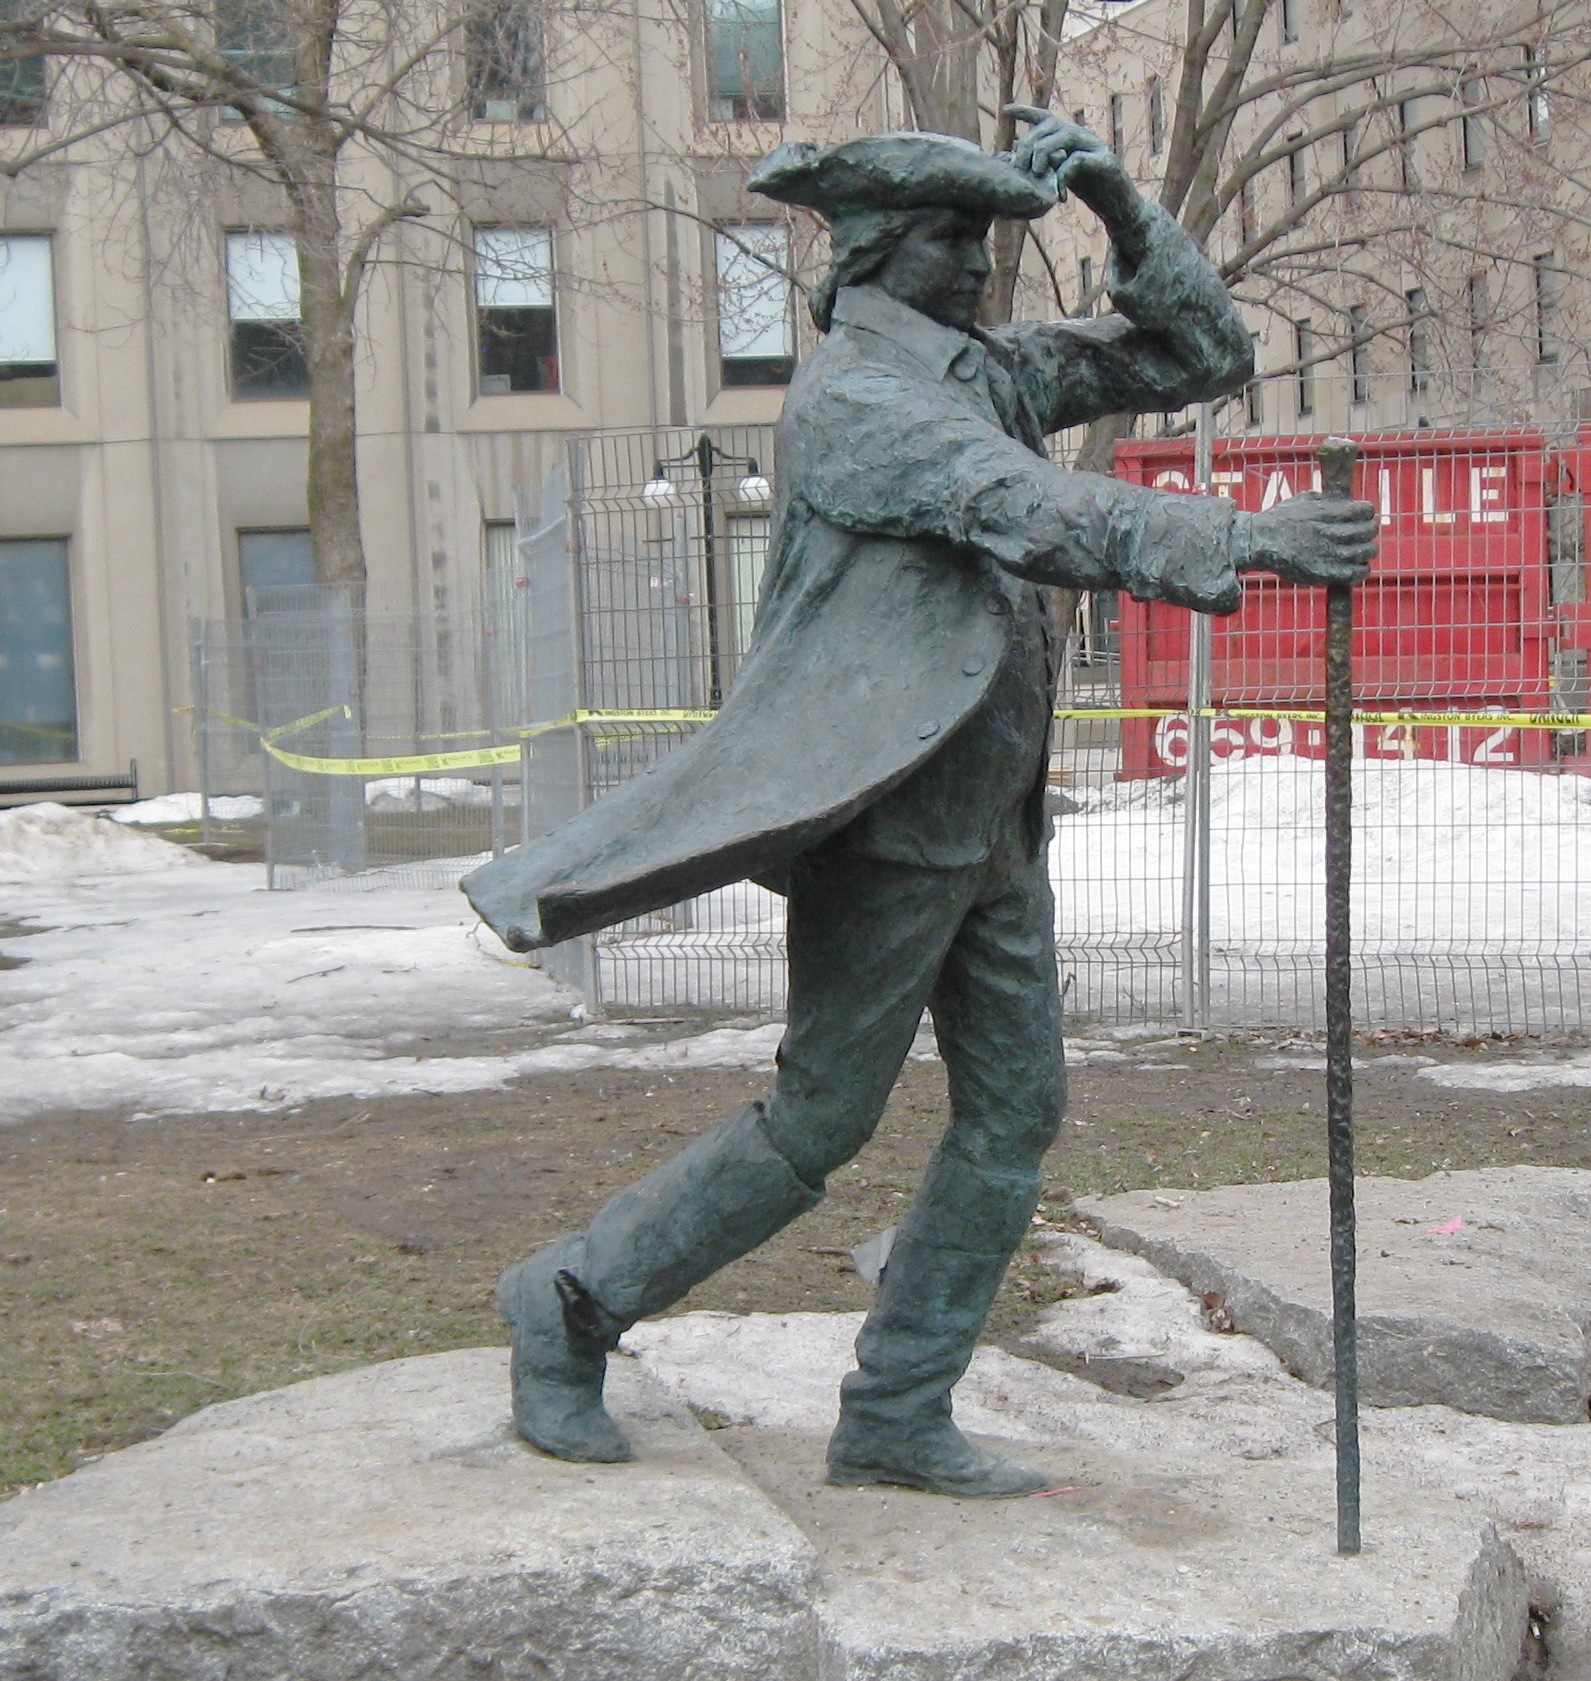 https://upload.wikimedia.org/wikipedia/commons/e/ed/Statue_of_James_McGill_04.jpg